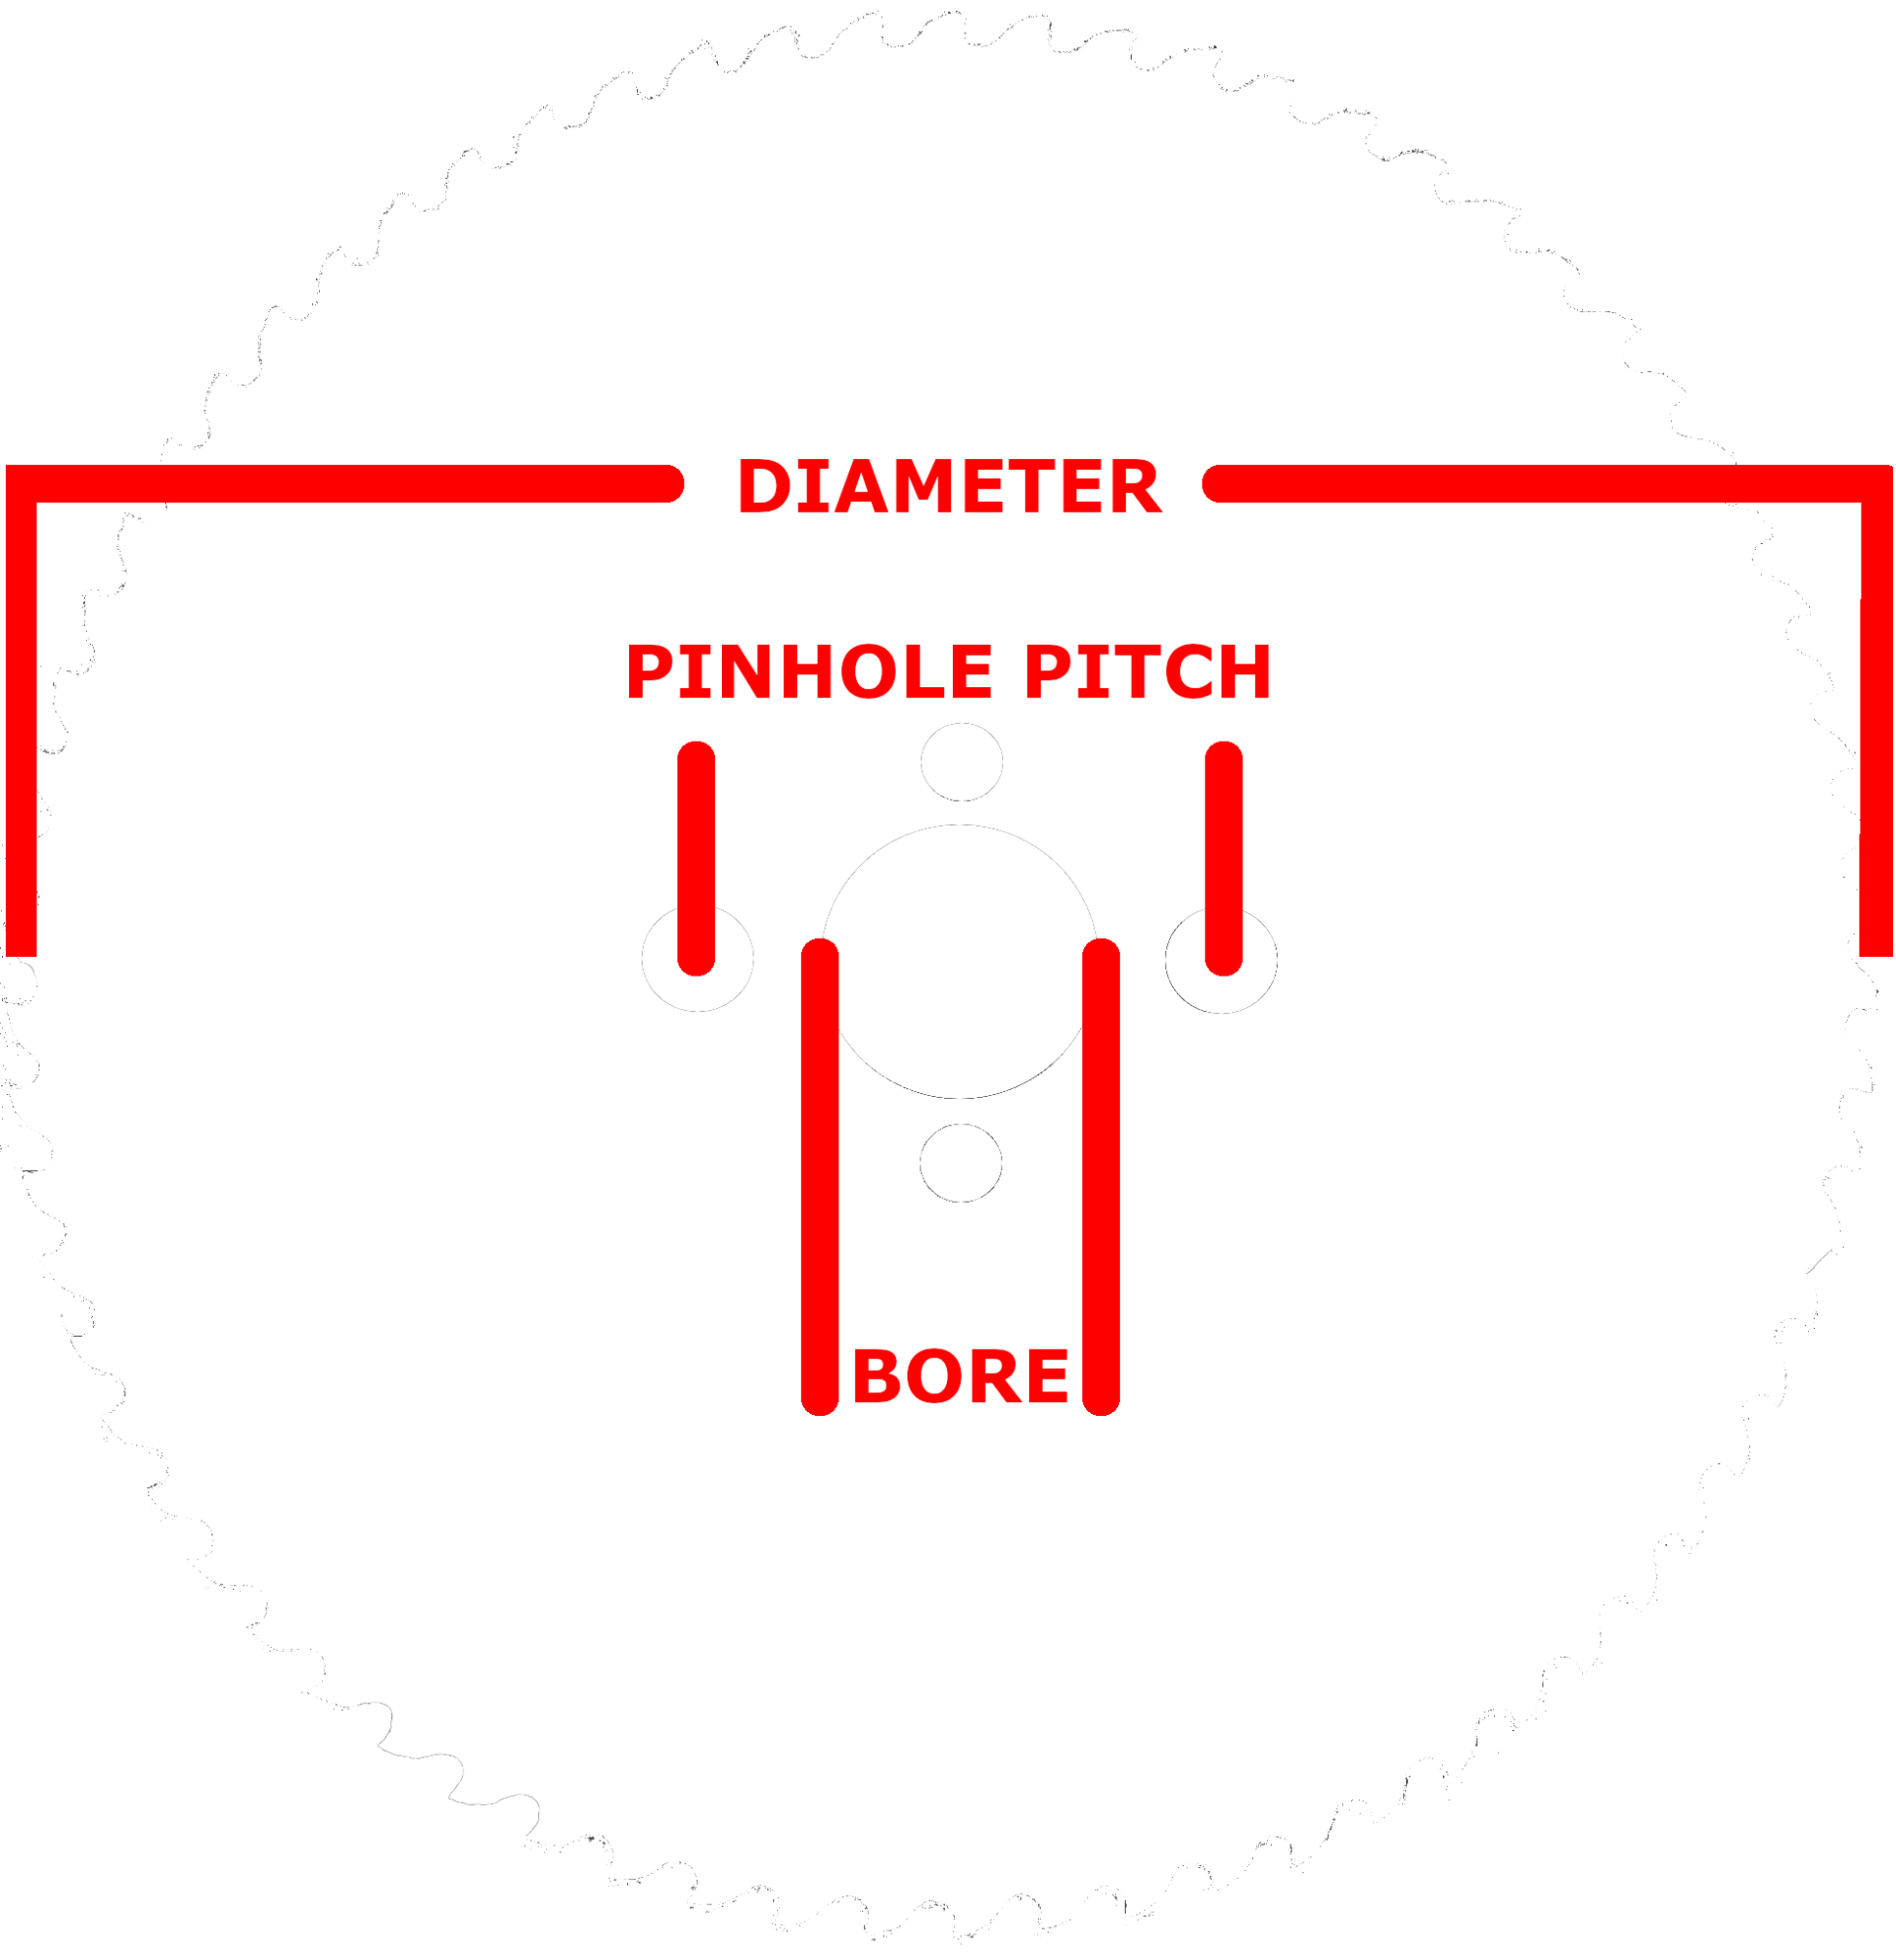 Diameter Pinhole Pitch Bore Saw Blade